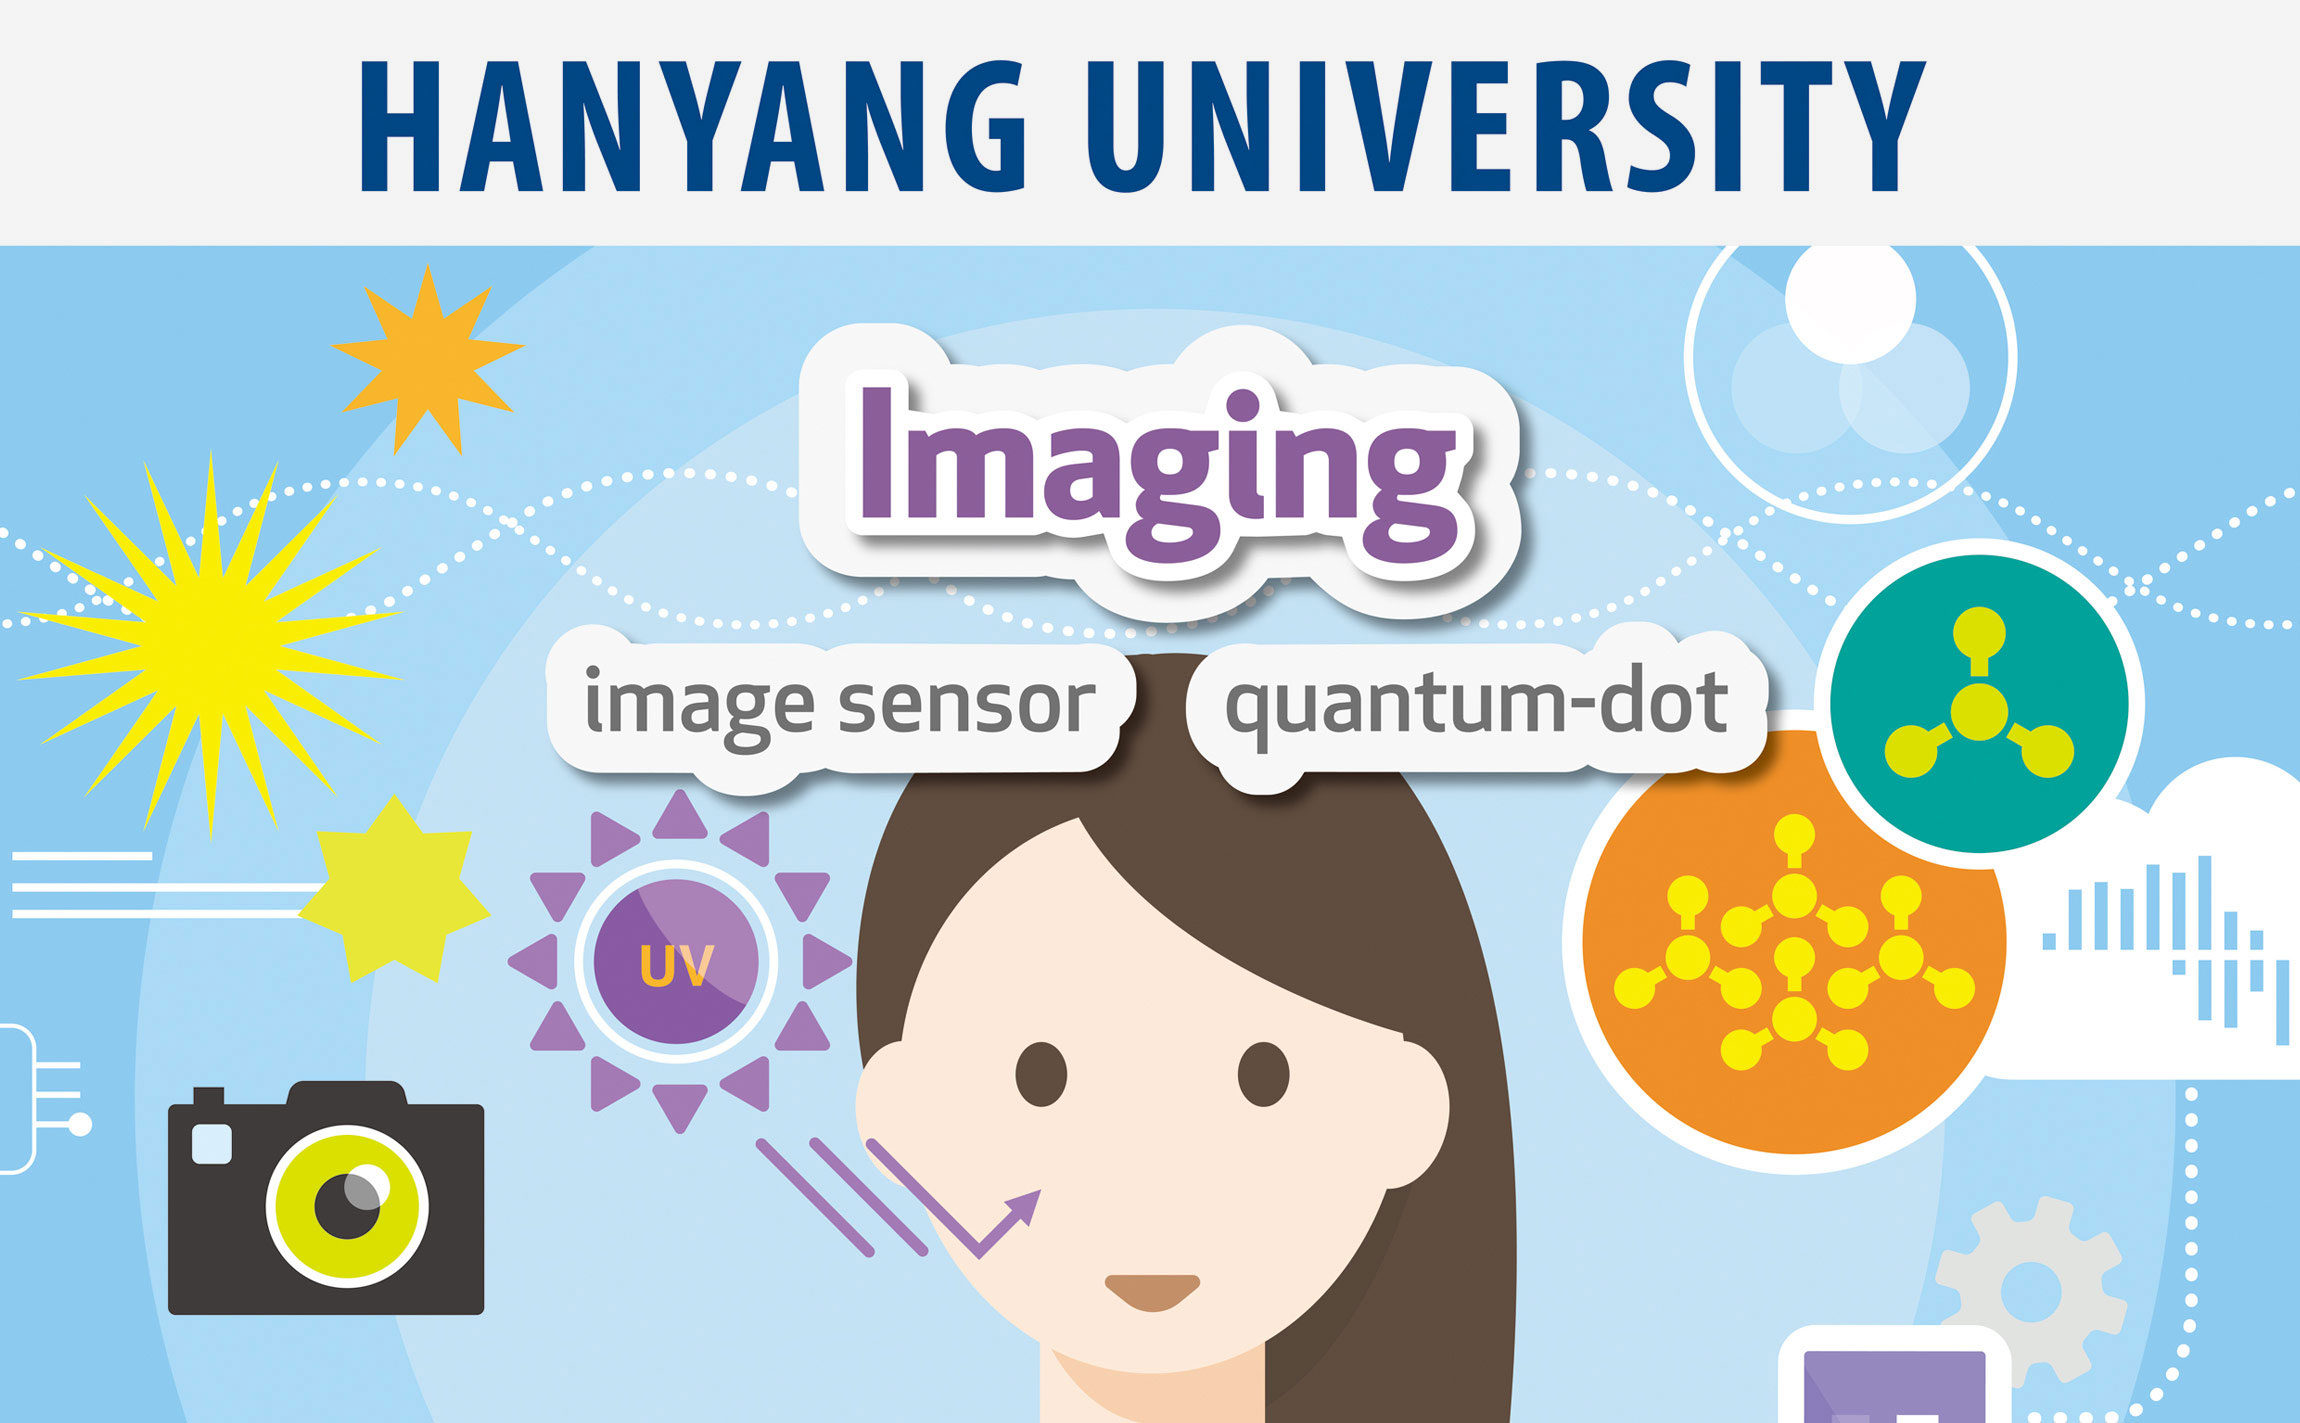 Hanyang University CES Booth Graphic Hanyang University Exibition & Environmental hanyang_univ_graphic-0.jpg